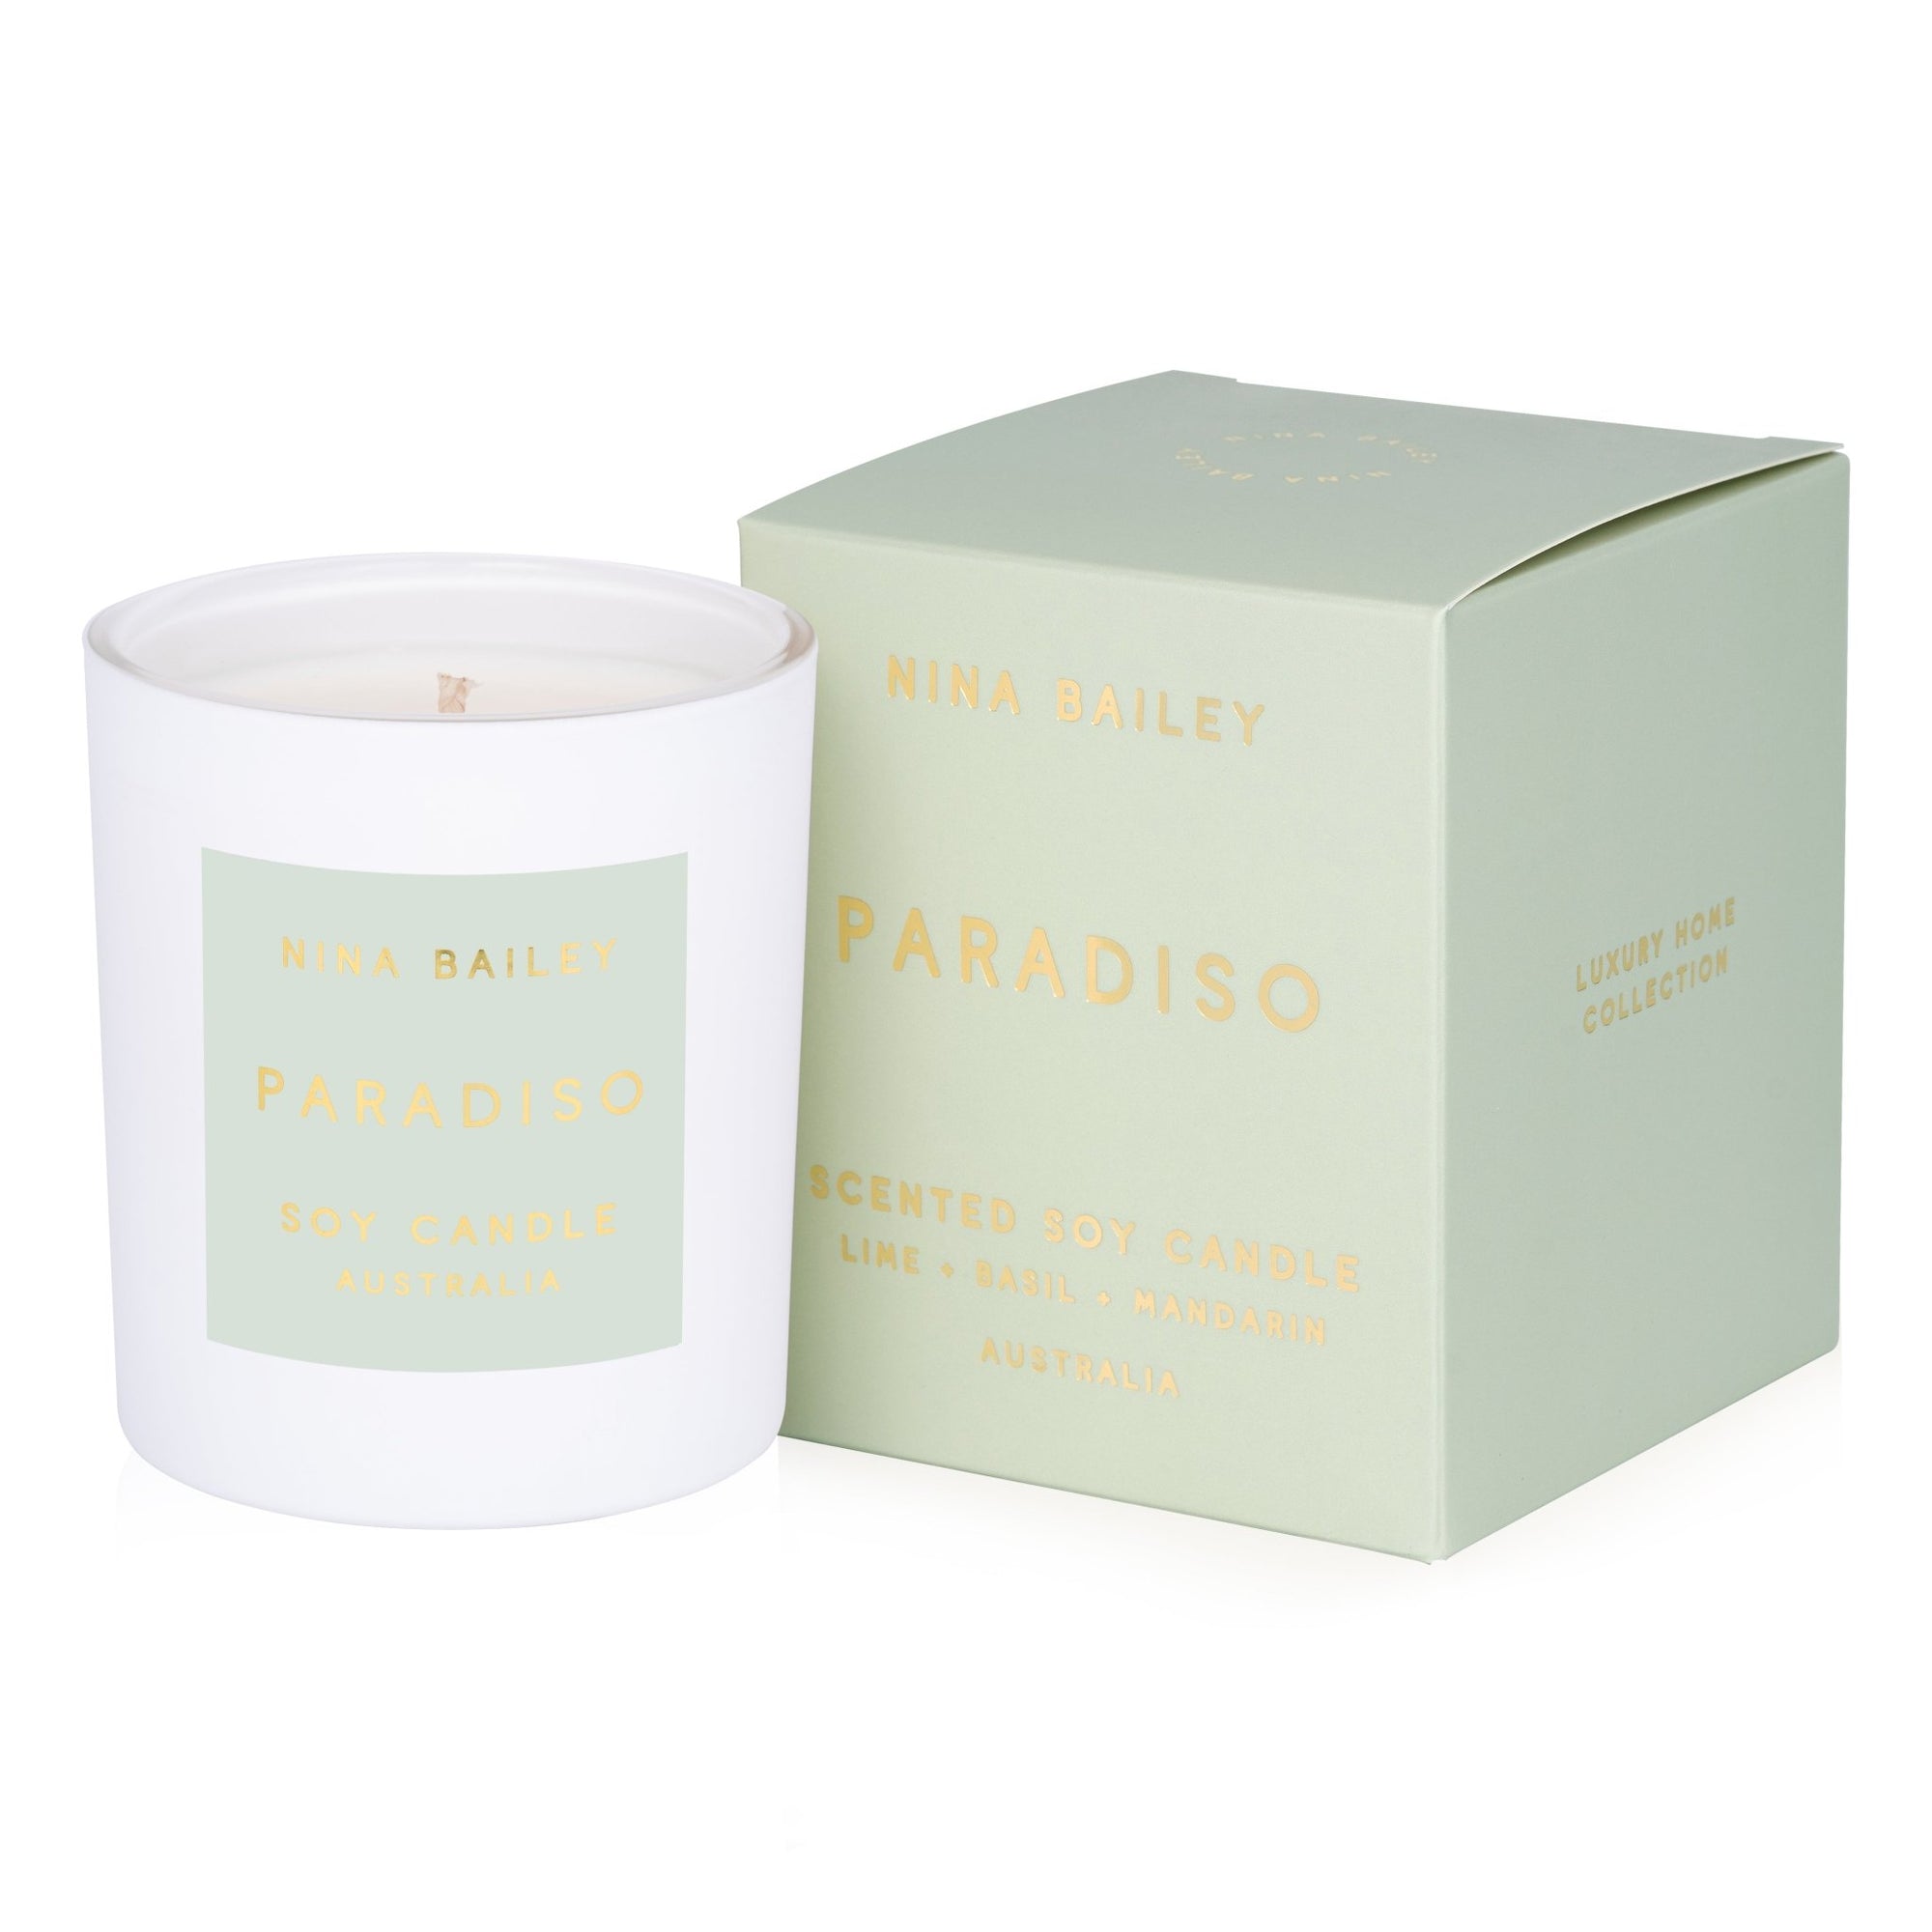 Paradiso - Lime Basil Mandarin Soy Candle - Nina Bailey